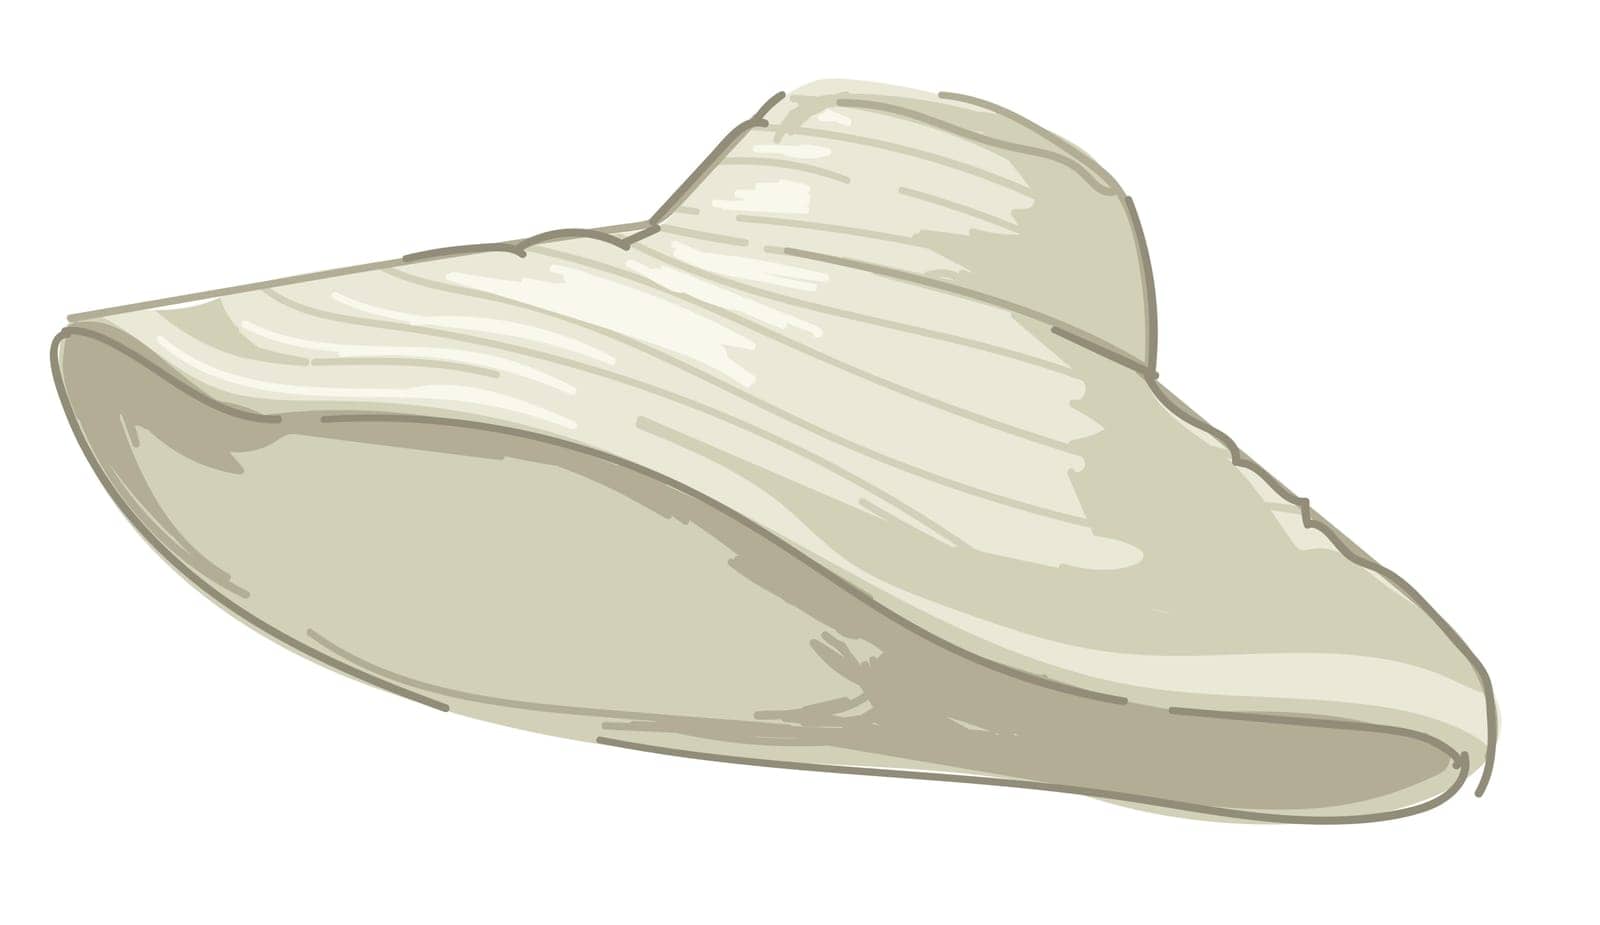 Summer fedora hat, stylish nautical accessory by Sonulkaster